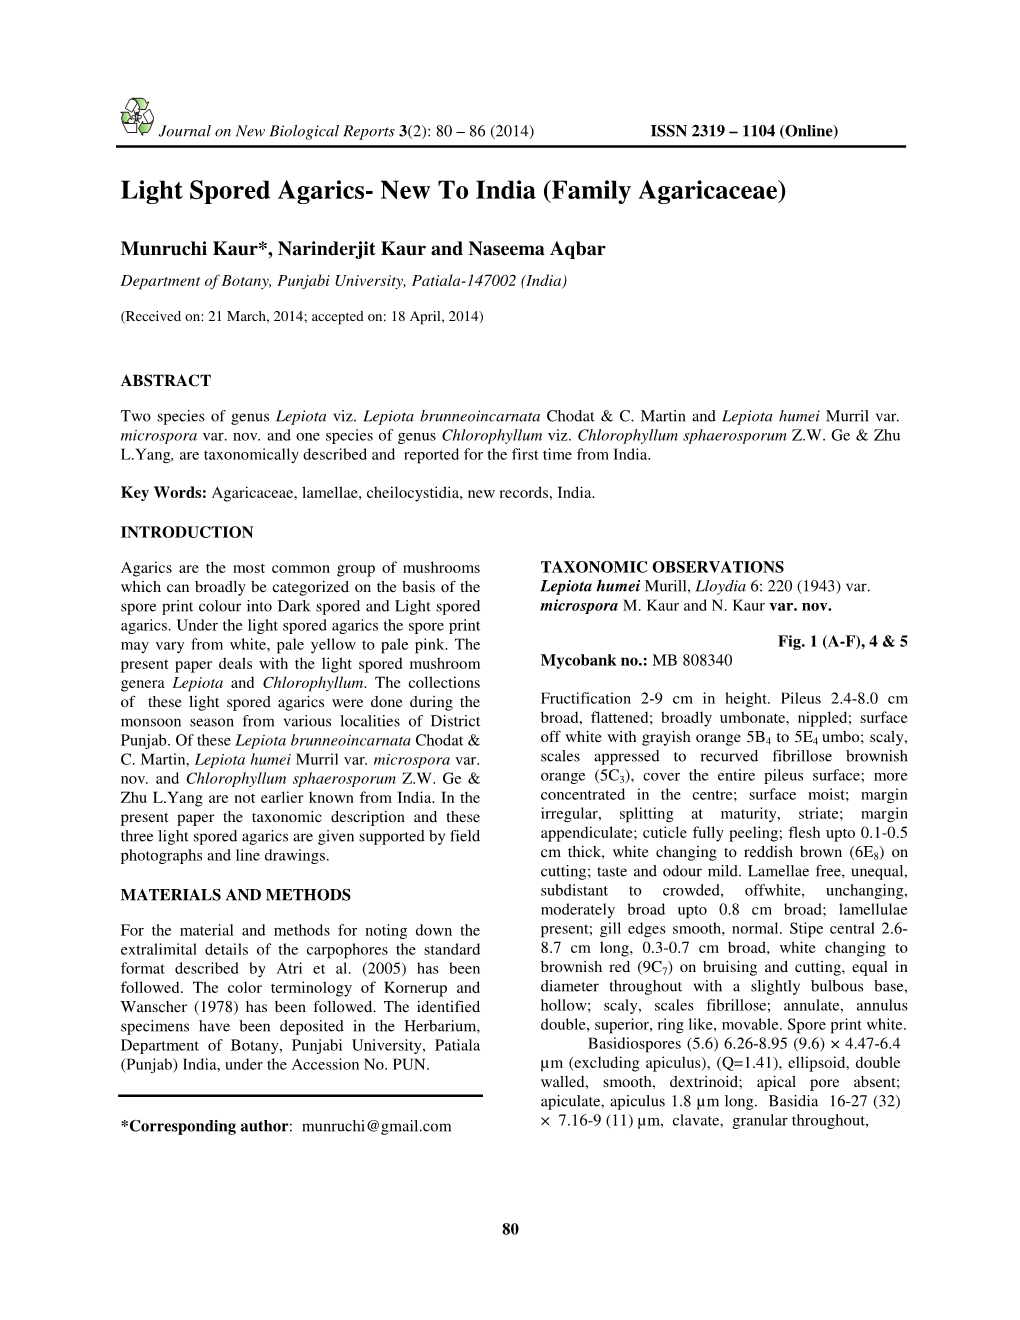 Light Spored Agarics- New to India (Family Agaricaceae)